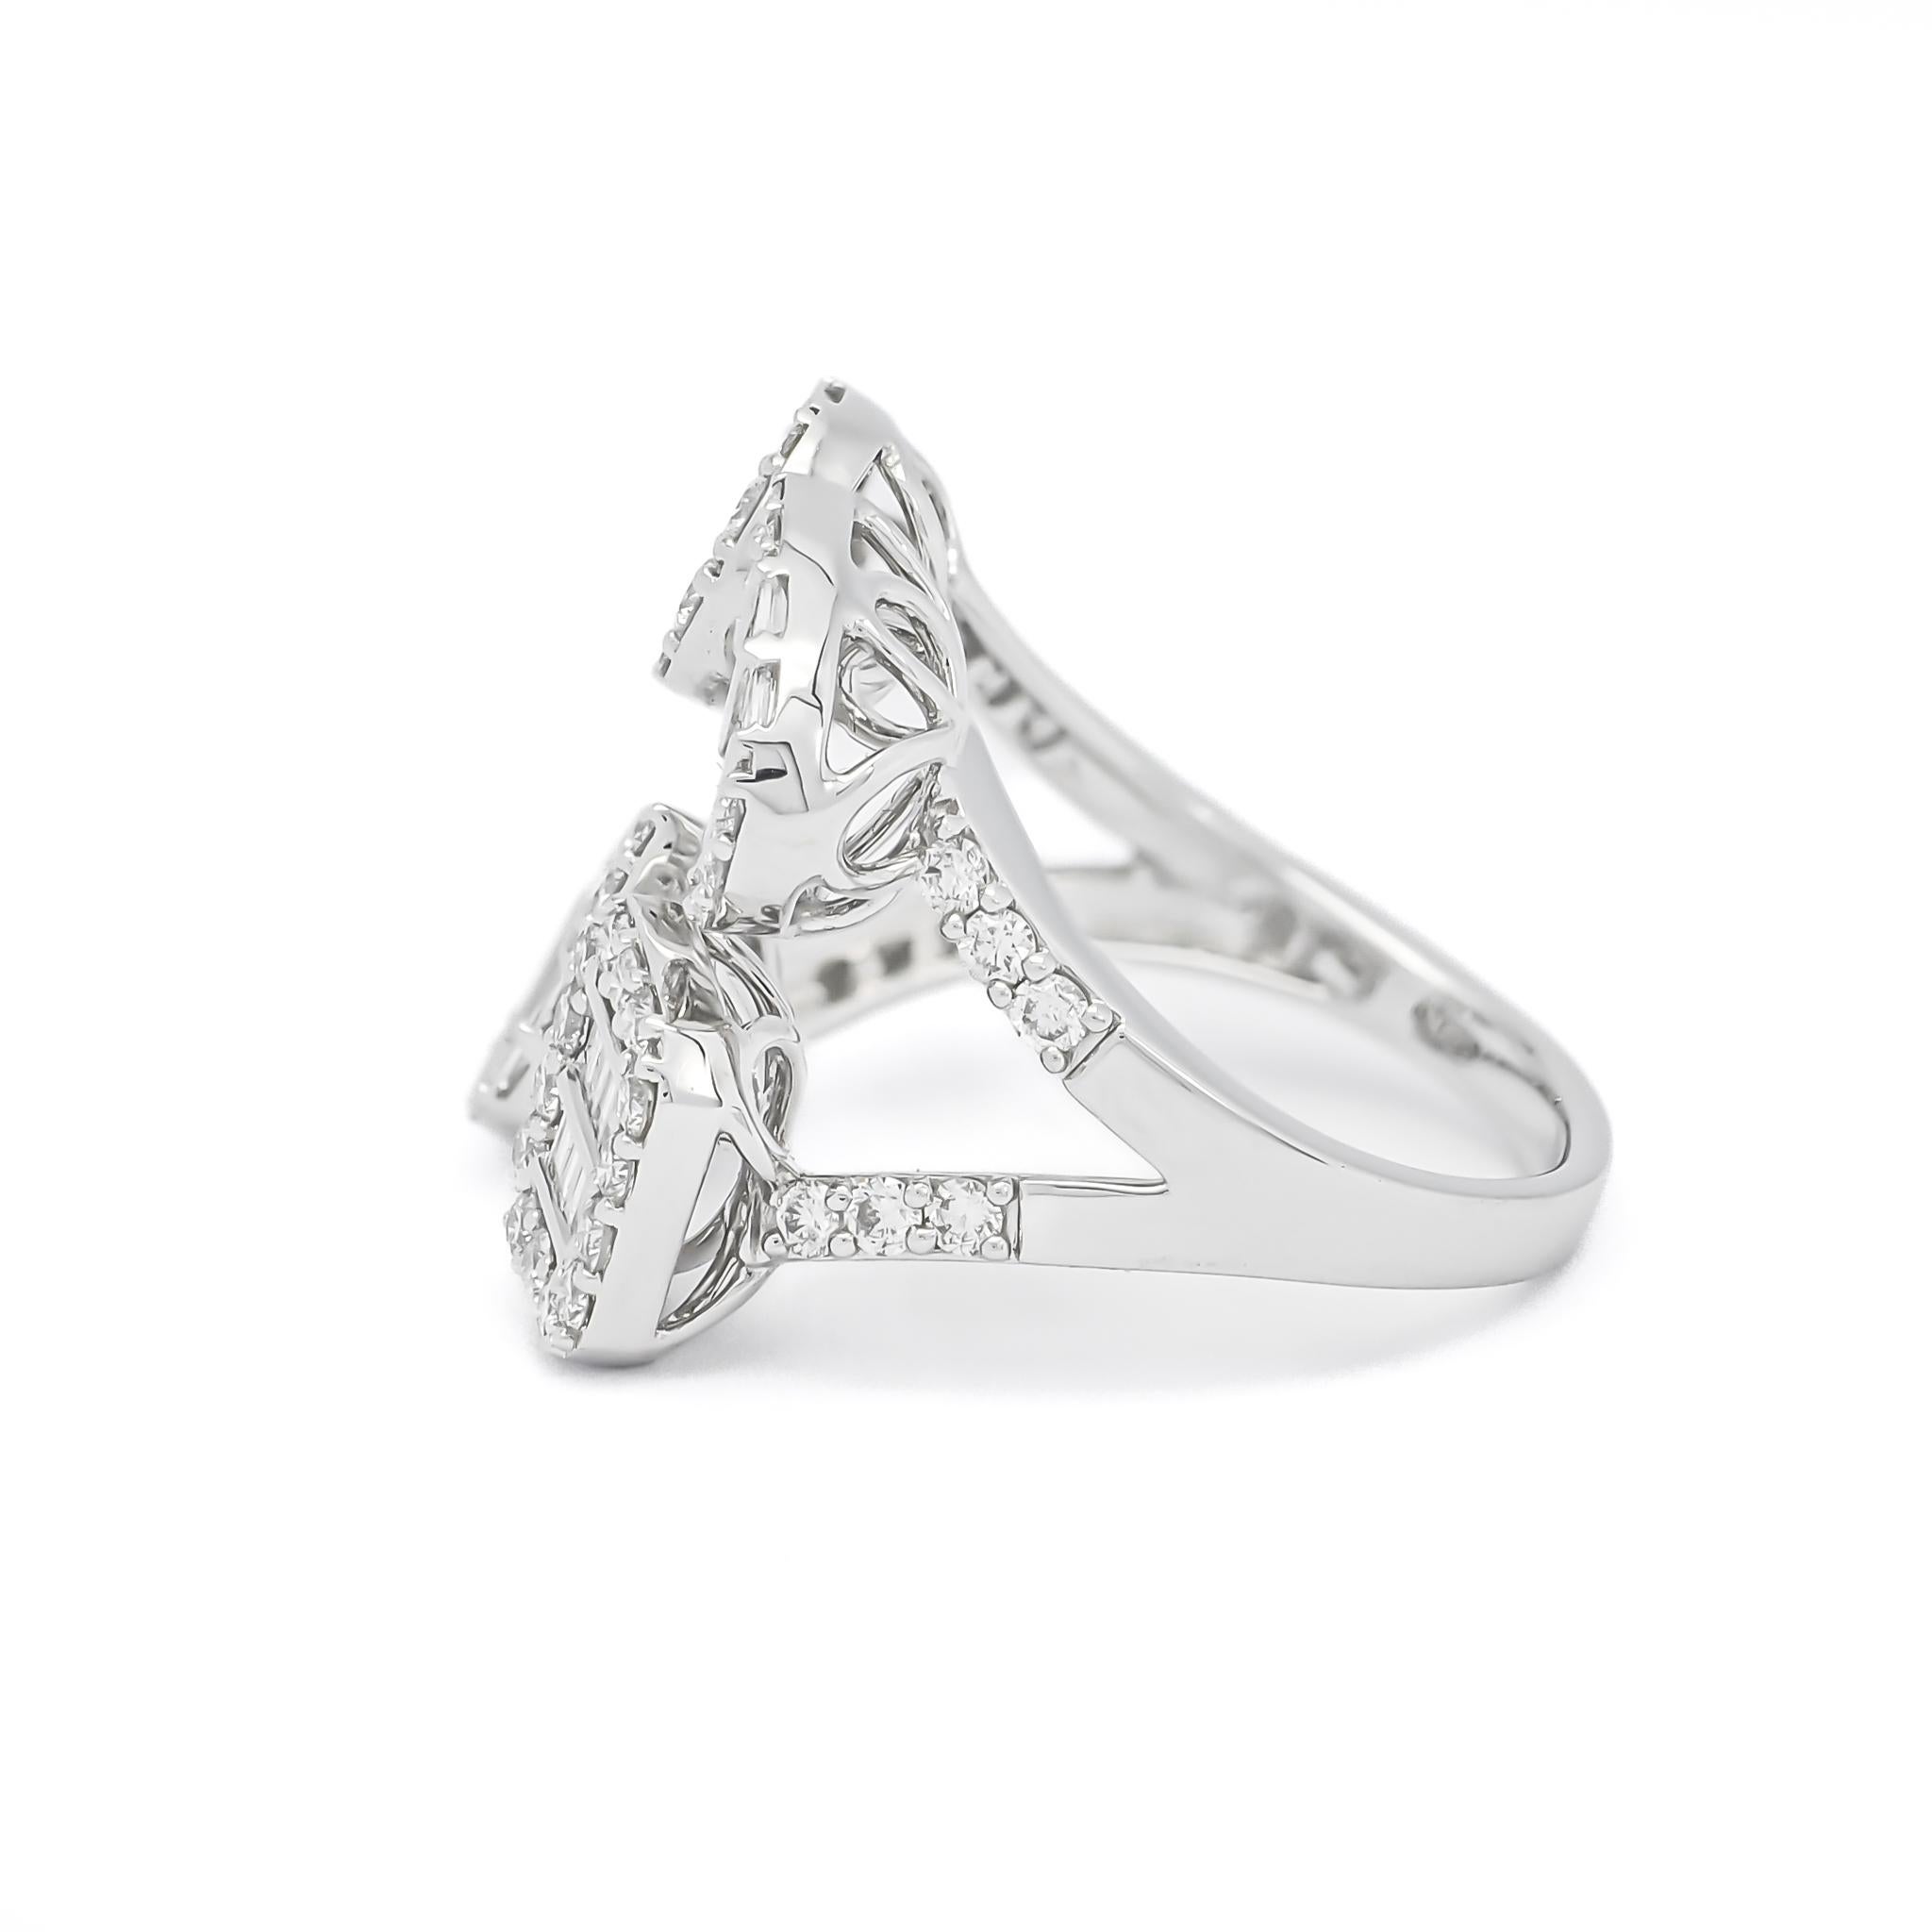 Modern Natural Diamond Ring 1.23 cts 18 Karat White Gold High Fashion Statement Ring For Sale